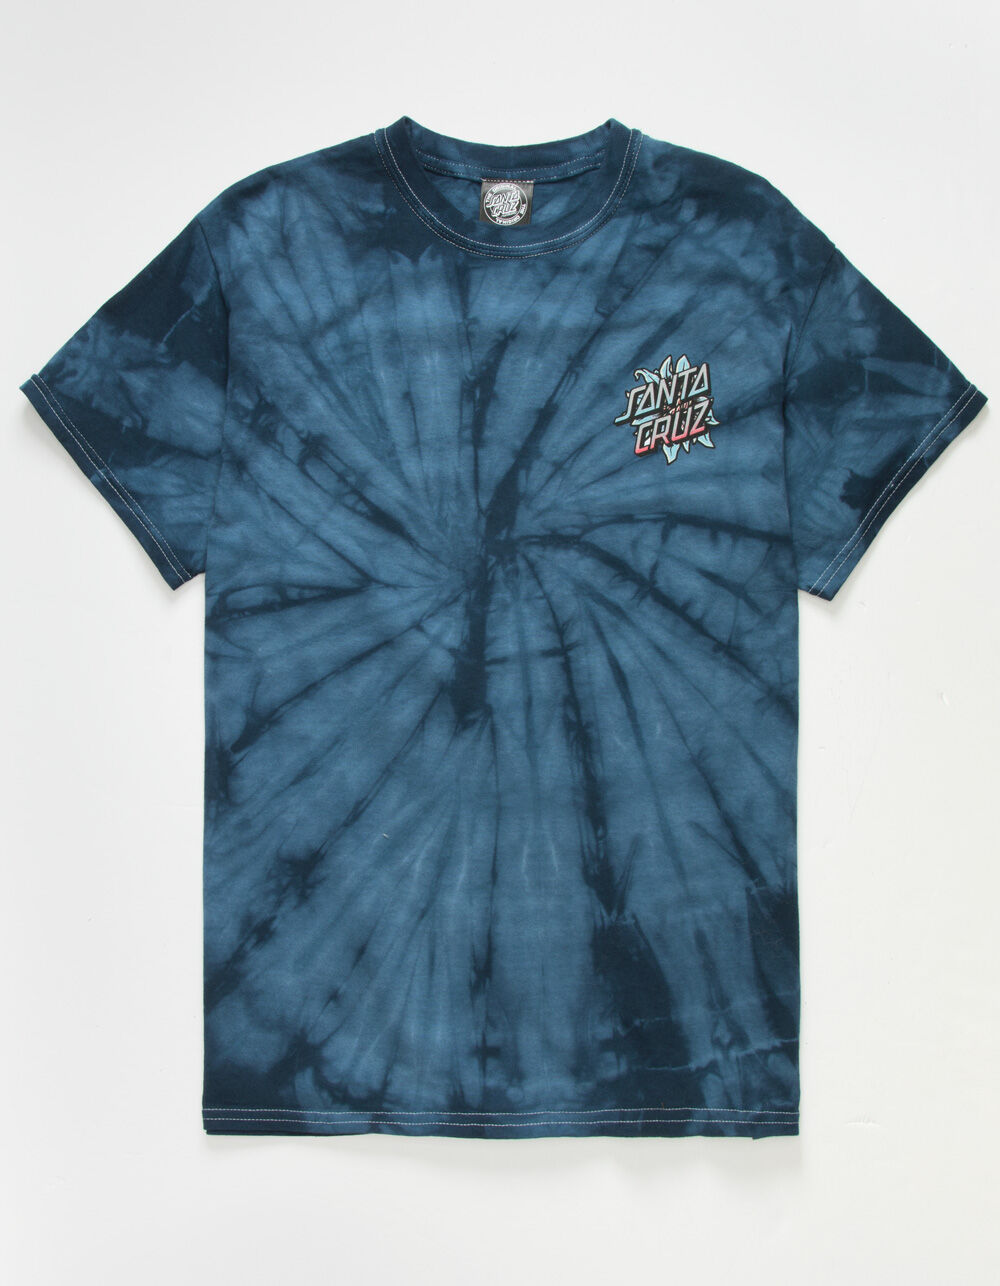 SANTA CRUZ Tomb Dot Tie Dye Mens T-Shirt - NAVY COMBO | Tillys